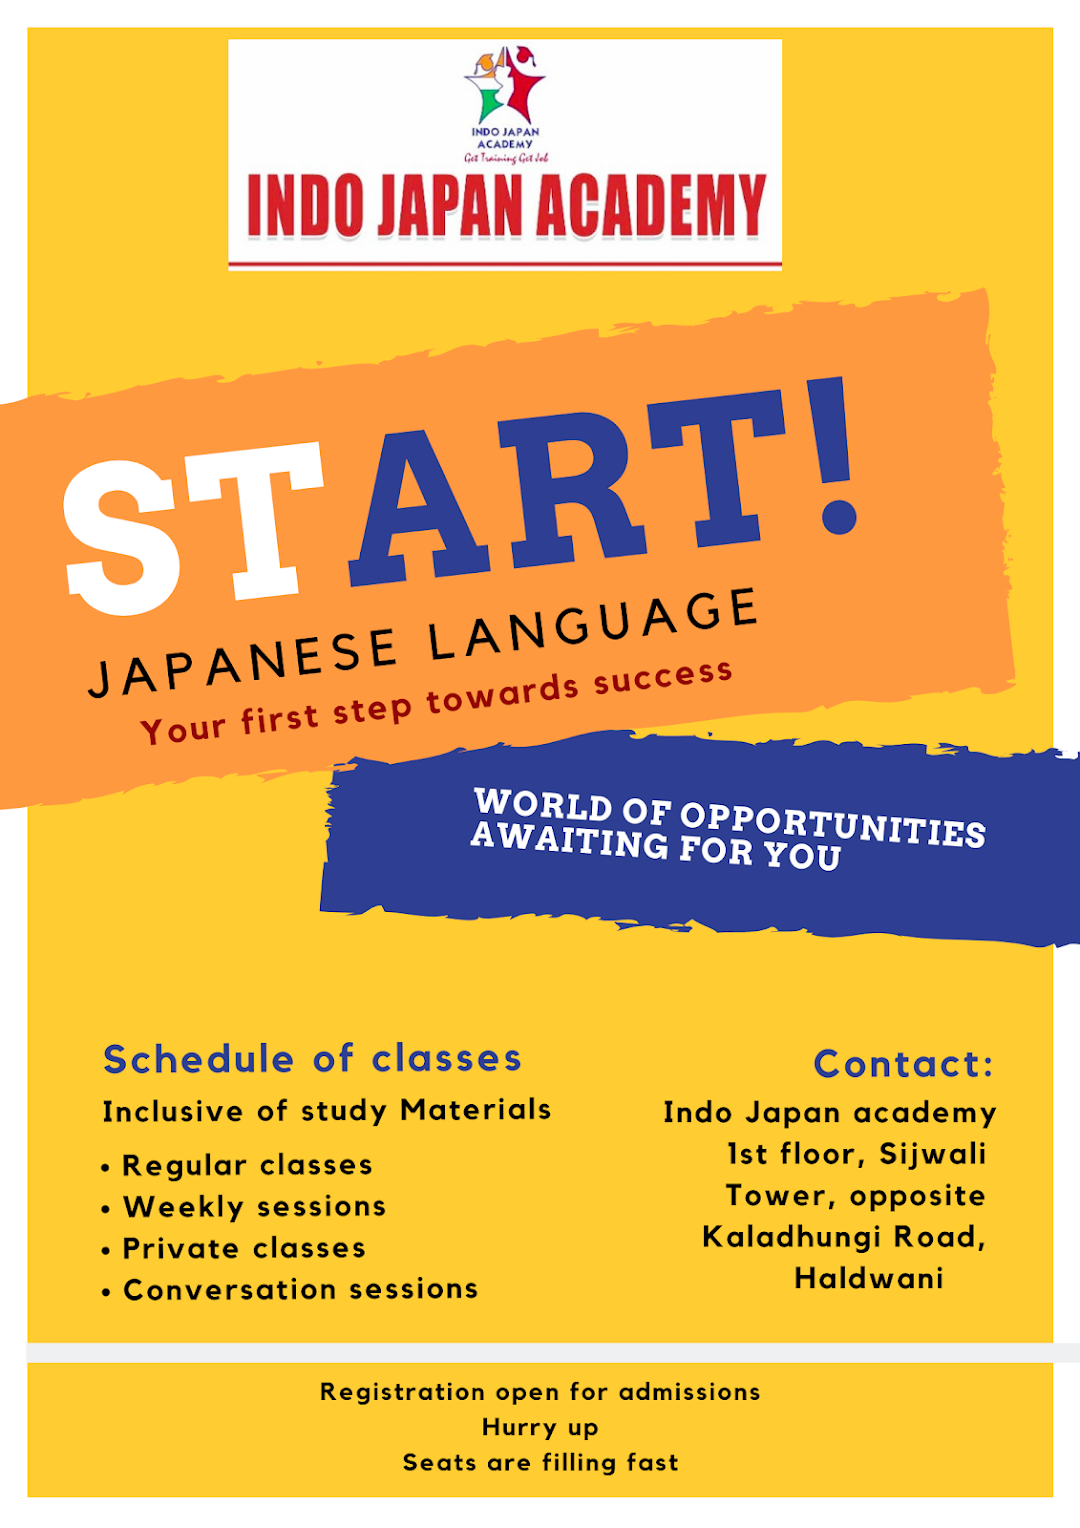 Indo Japan Academy Haldwani